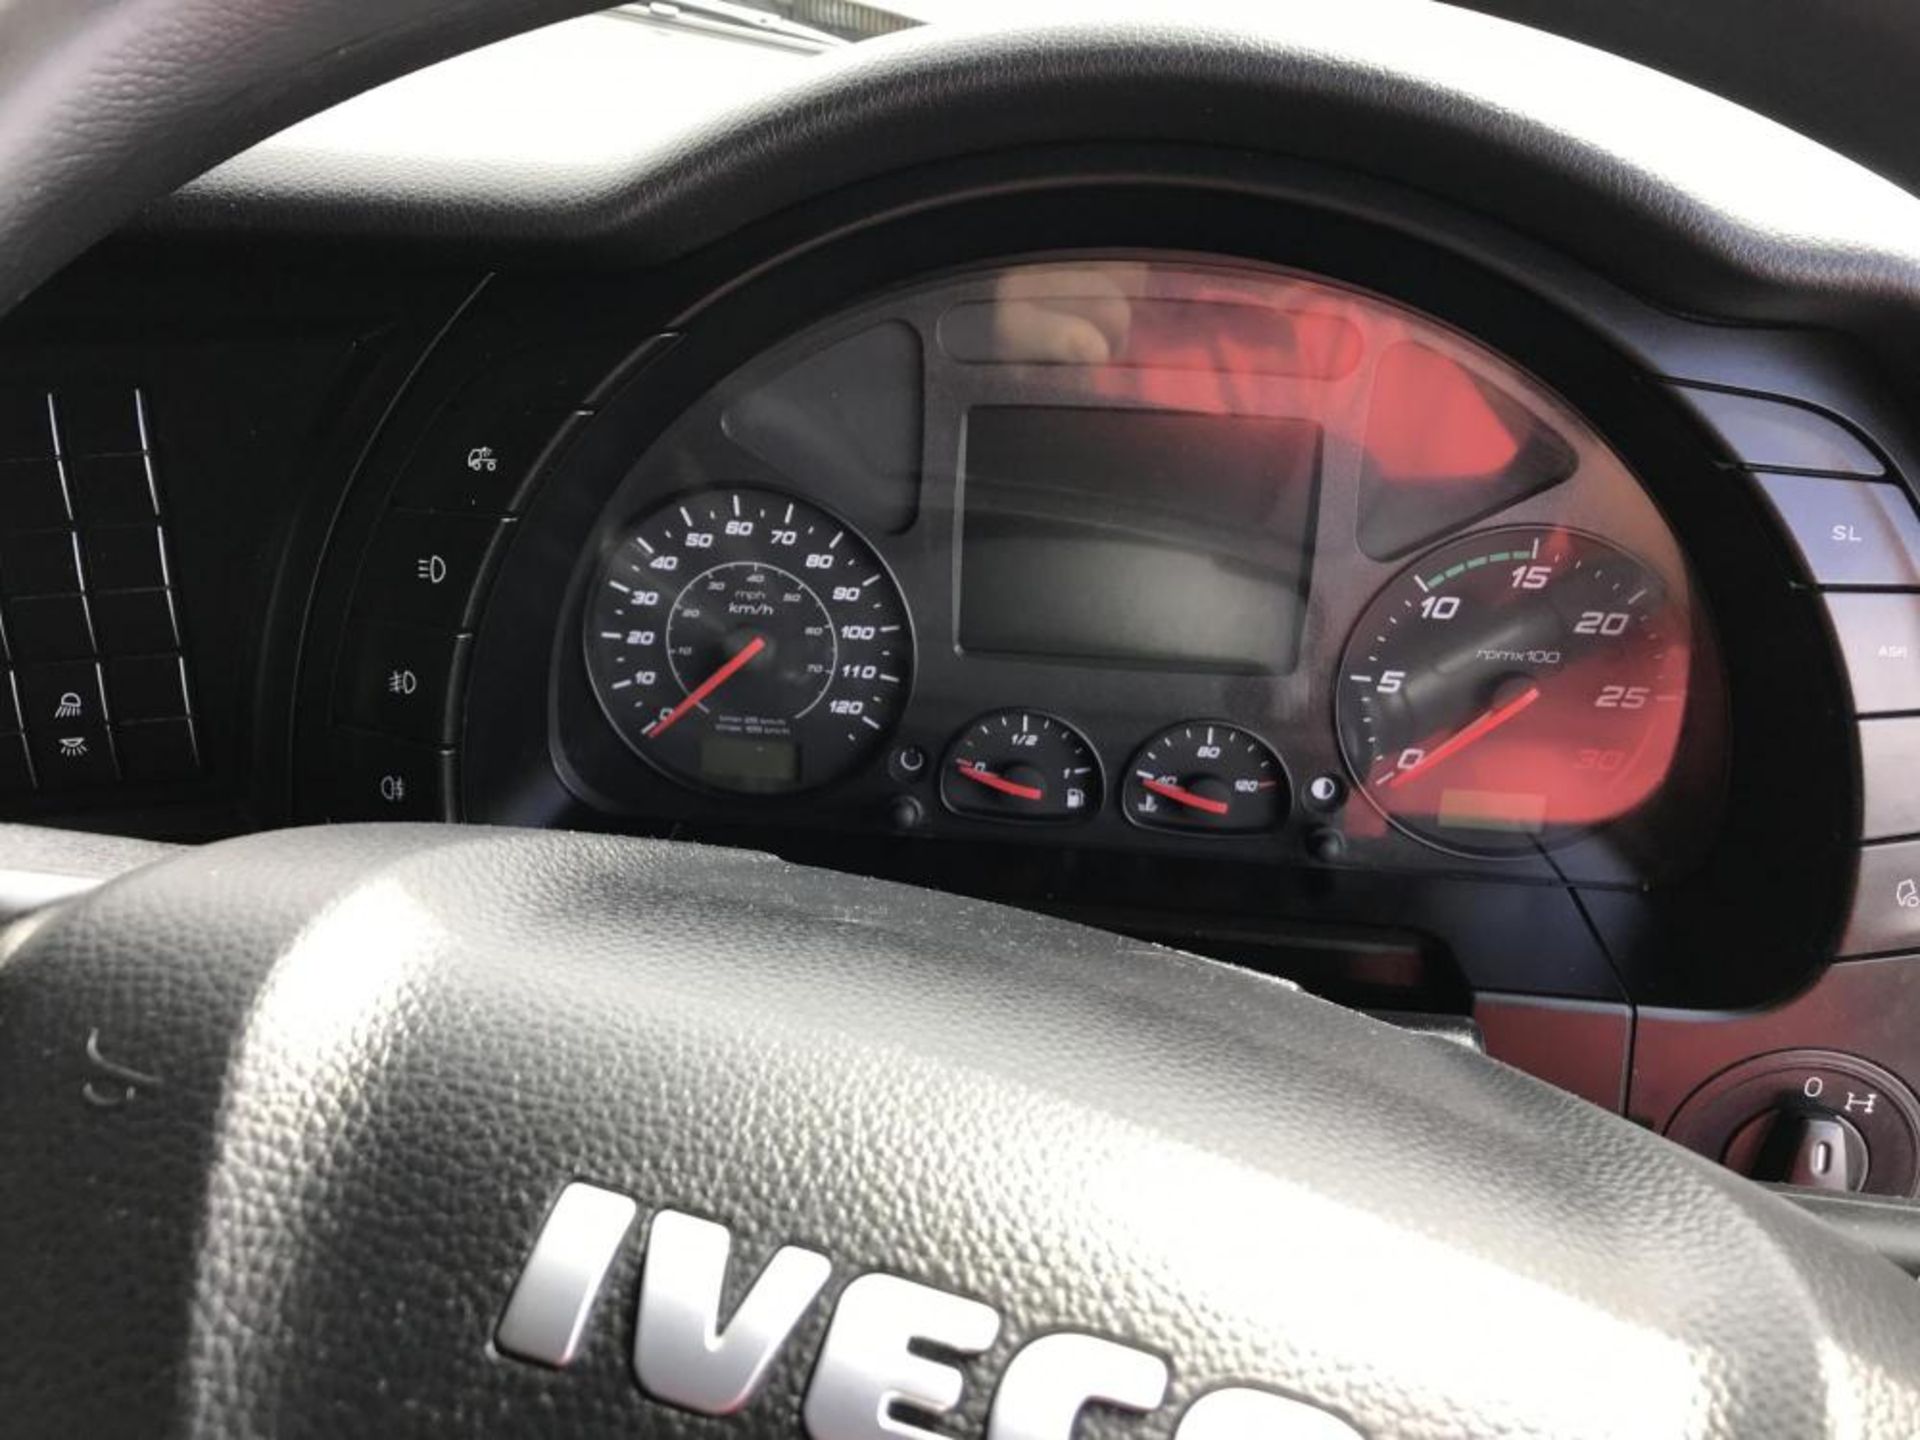 2014/14 REG IVECO STRALIS 440 EURO 5 6X2 TRACTOR UNIT AUTO GEARBOX SLEEPER CAB *PLUS VAT* - Image 13 of 23